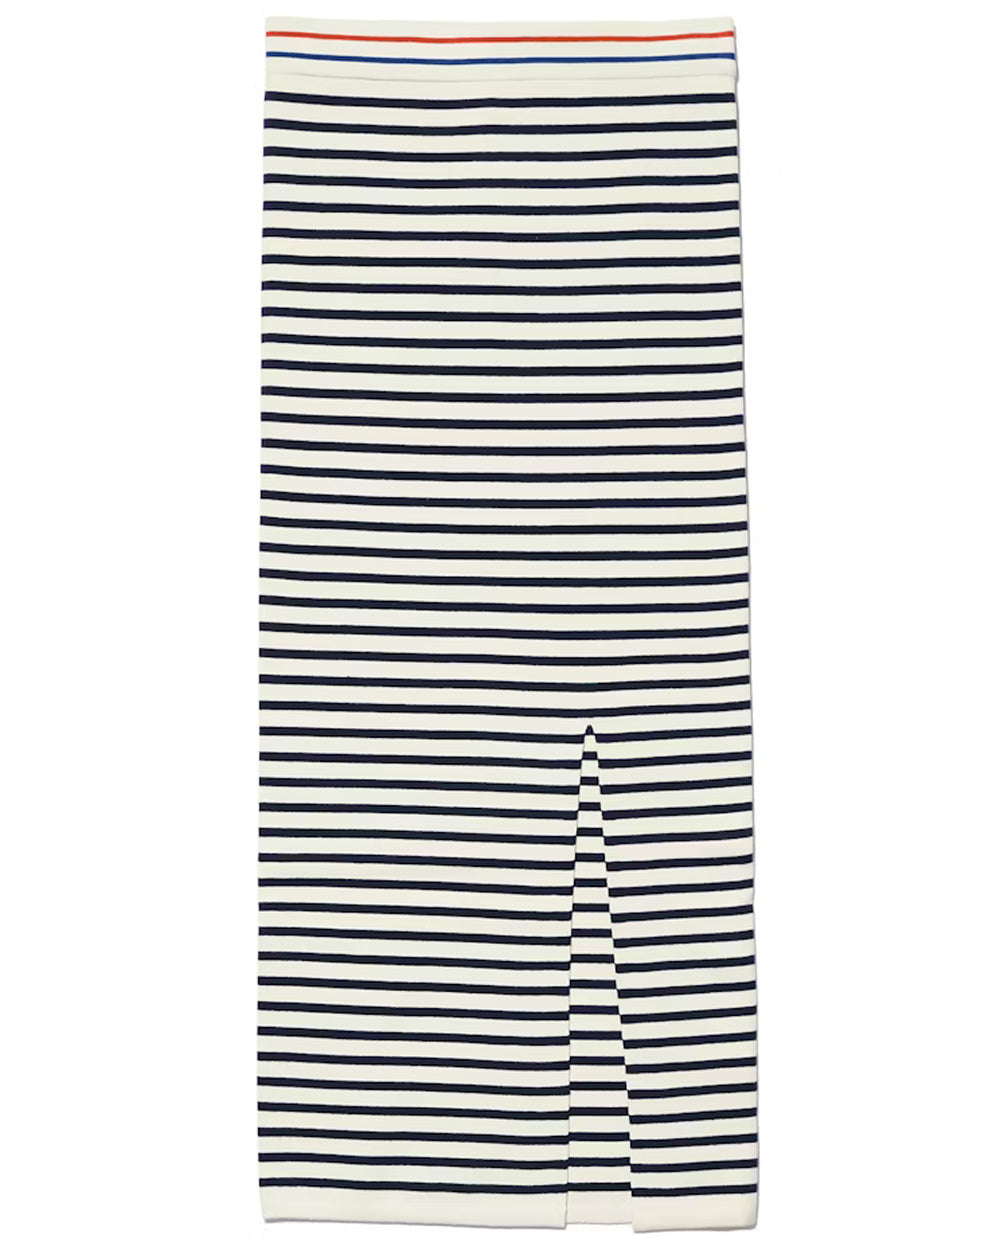 The Dee Tube Skirt in Cream and Navy Stripe